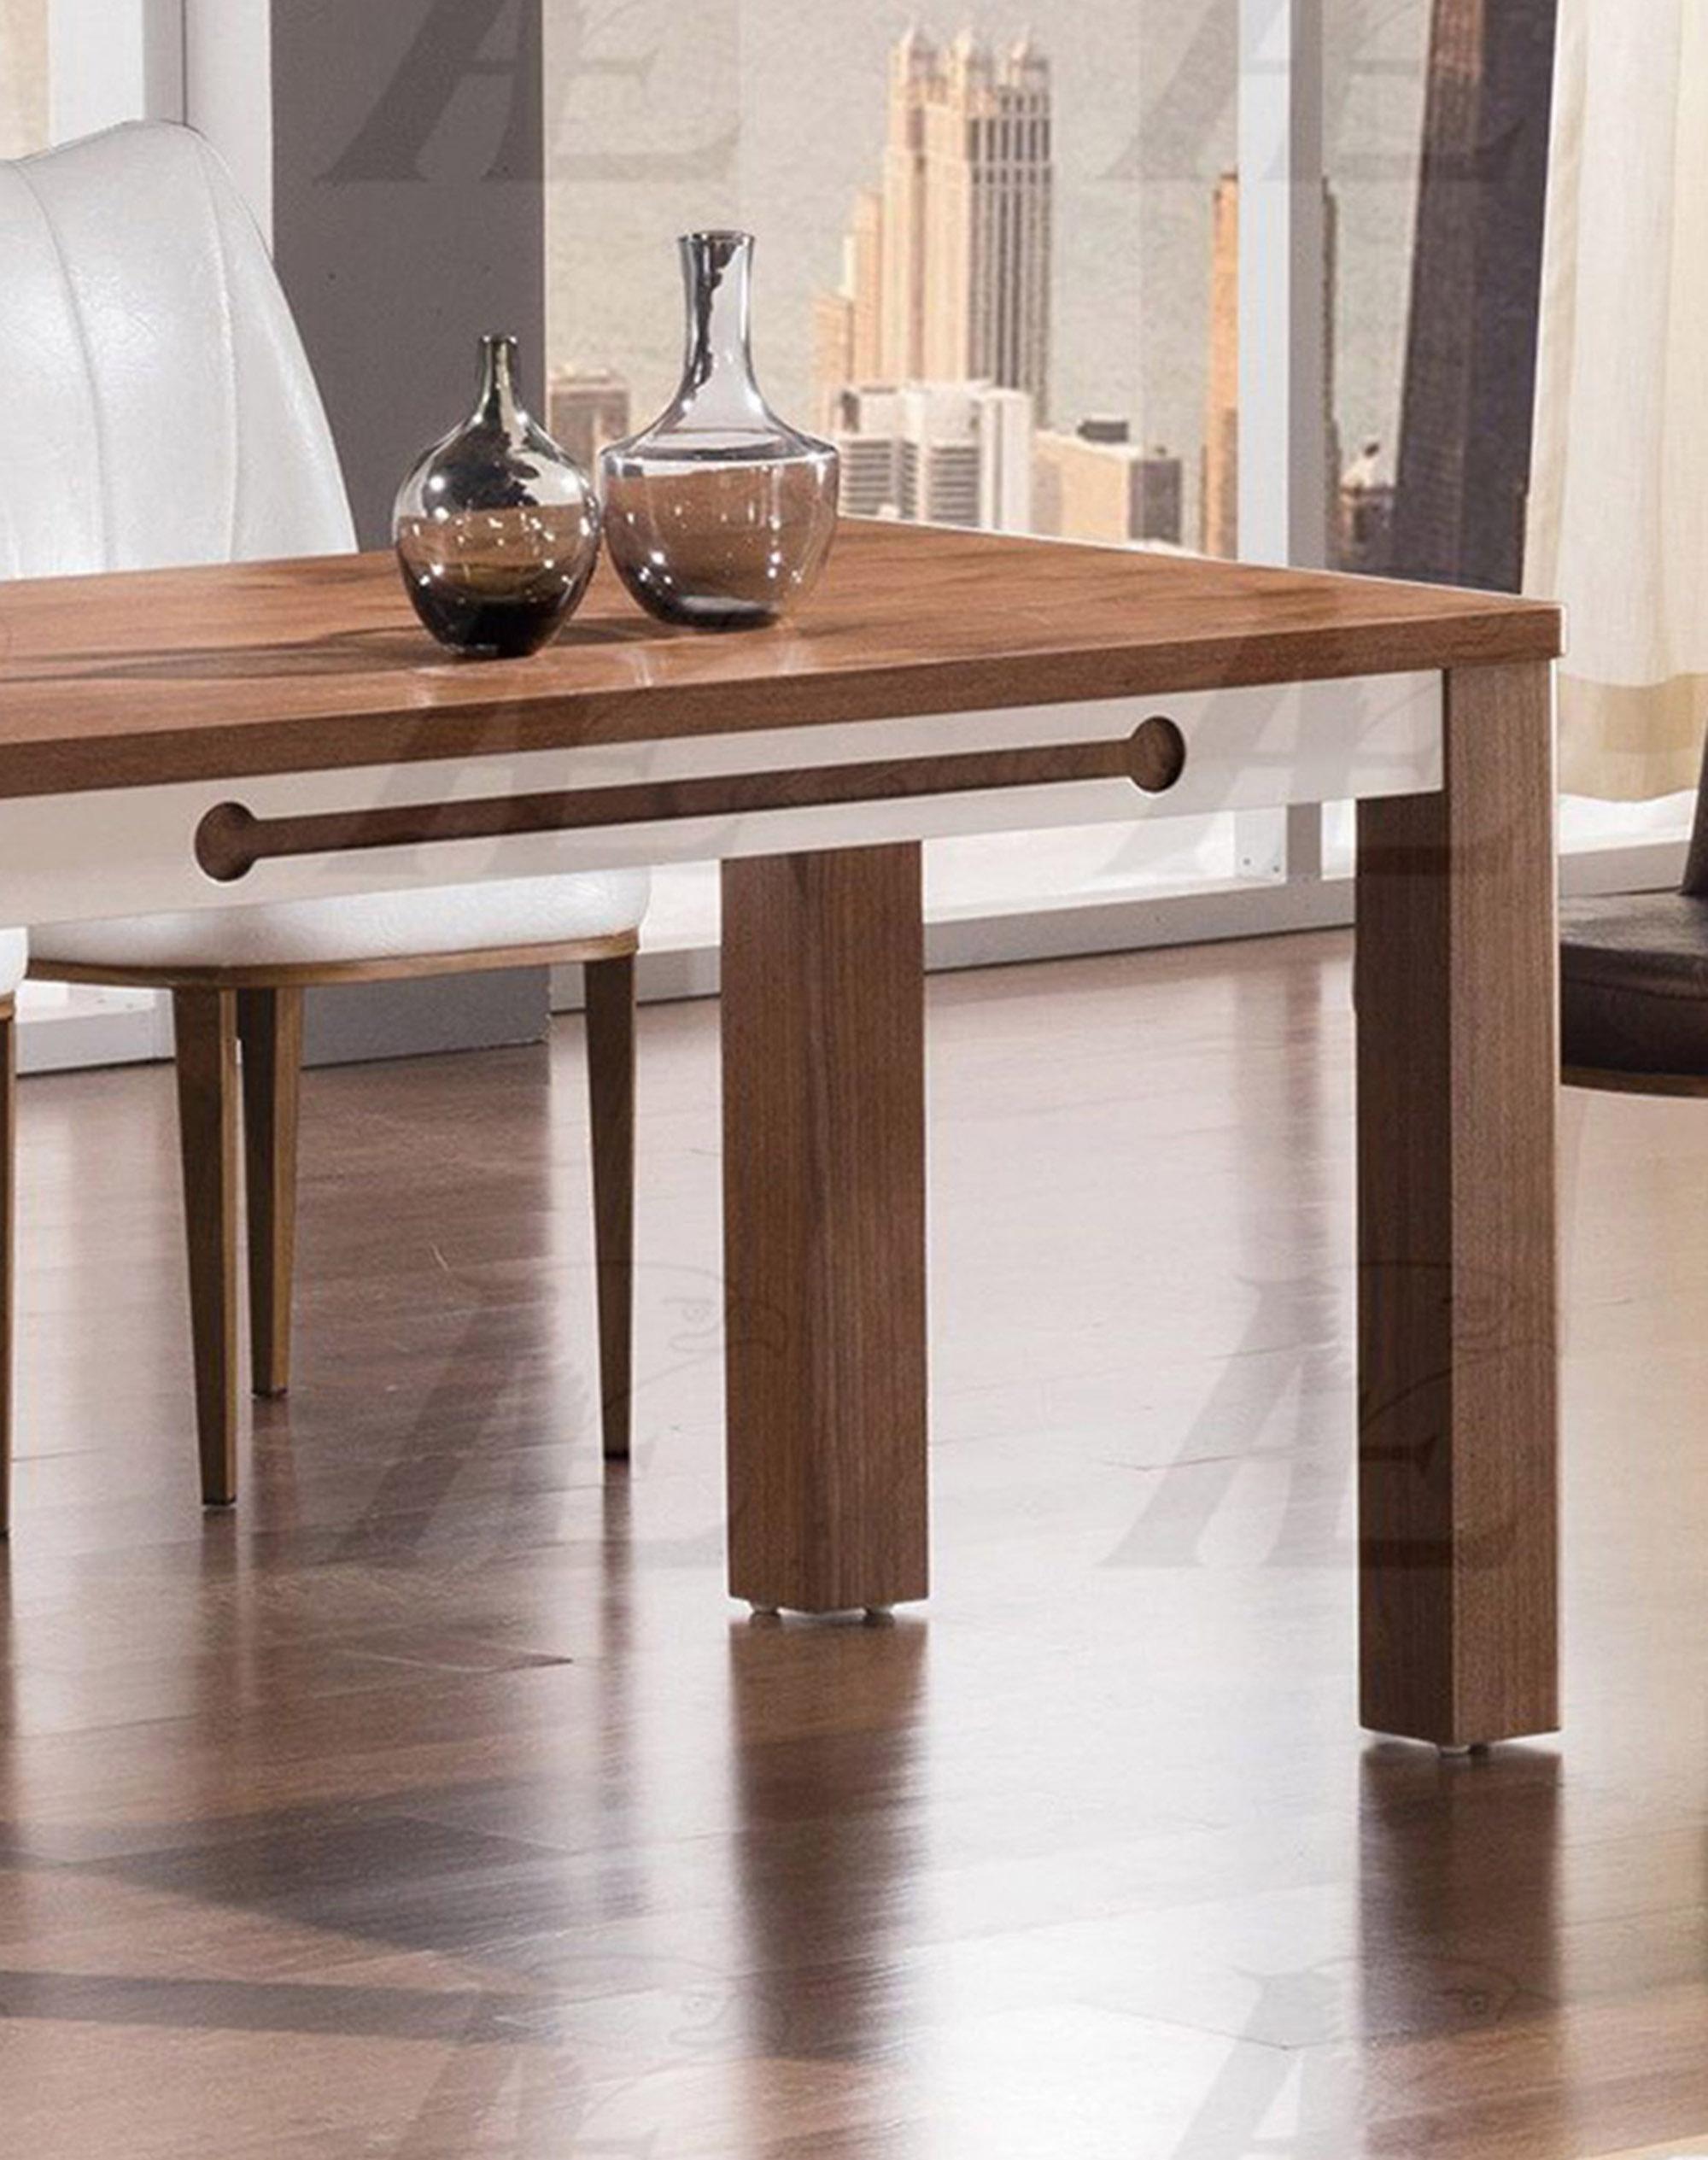 

    
American Eagle Furniture DT-D519 Dining Table Brown/Ivory DT-D519
